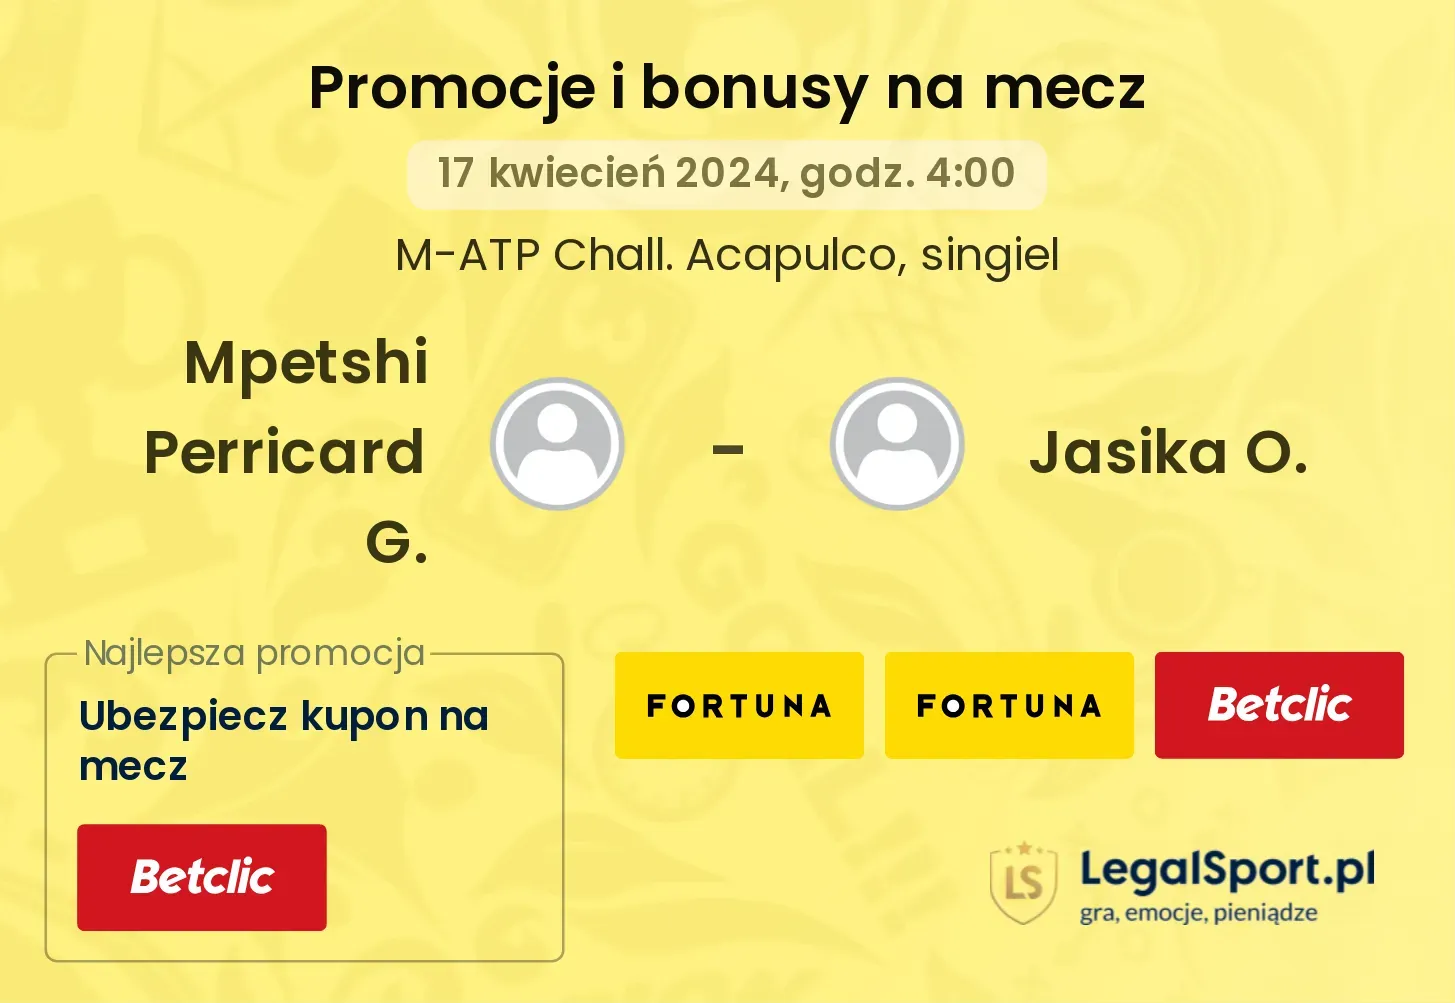 Mpetshi Perricard G. - Jasika O. promocje bonusy na mecz